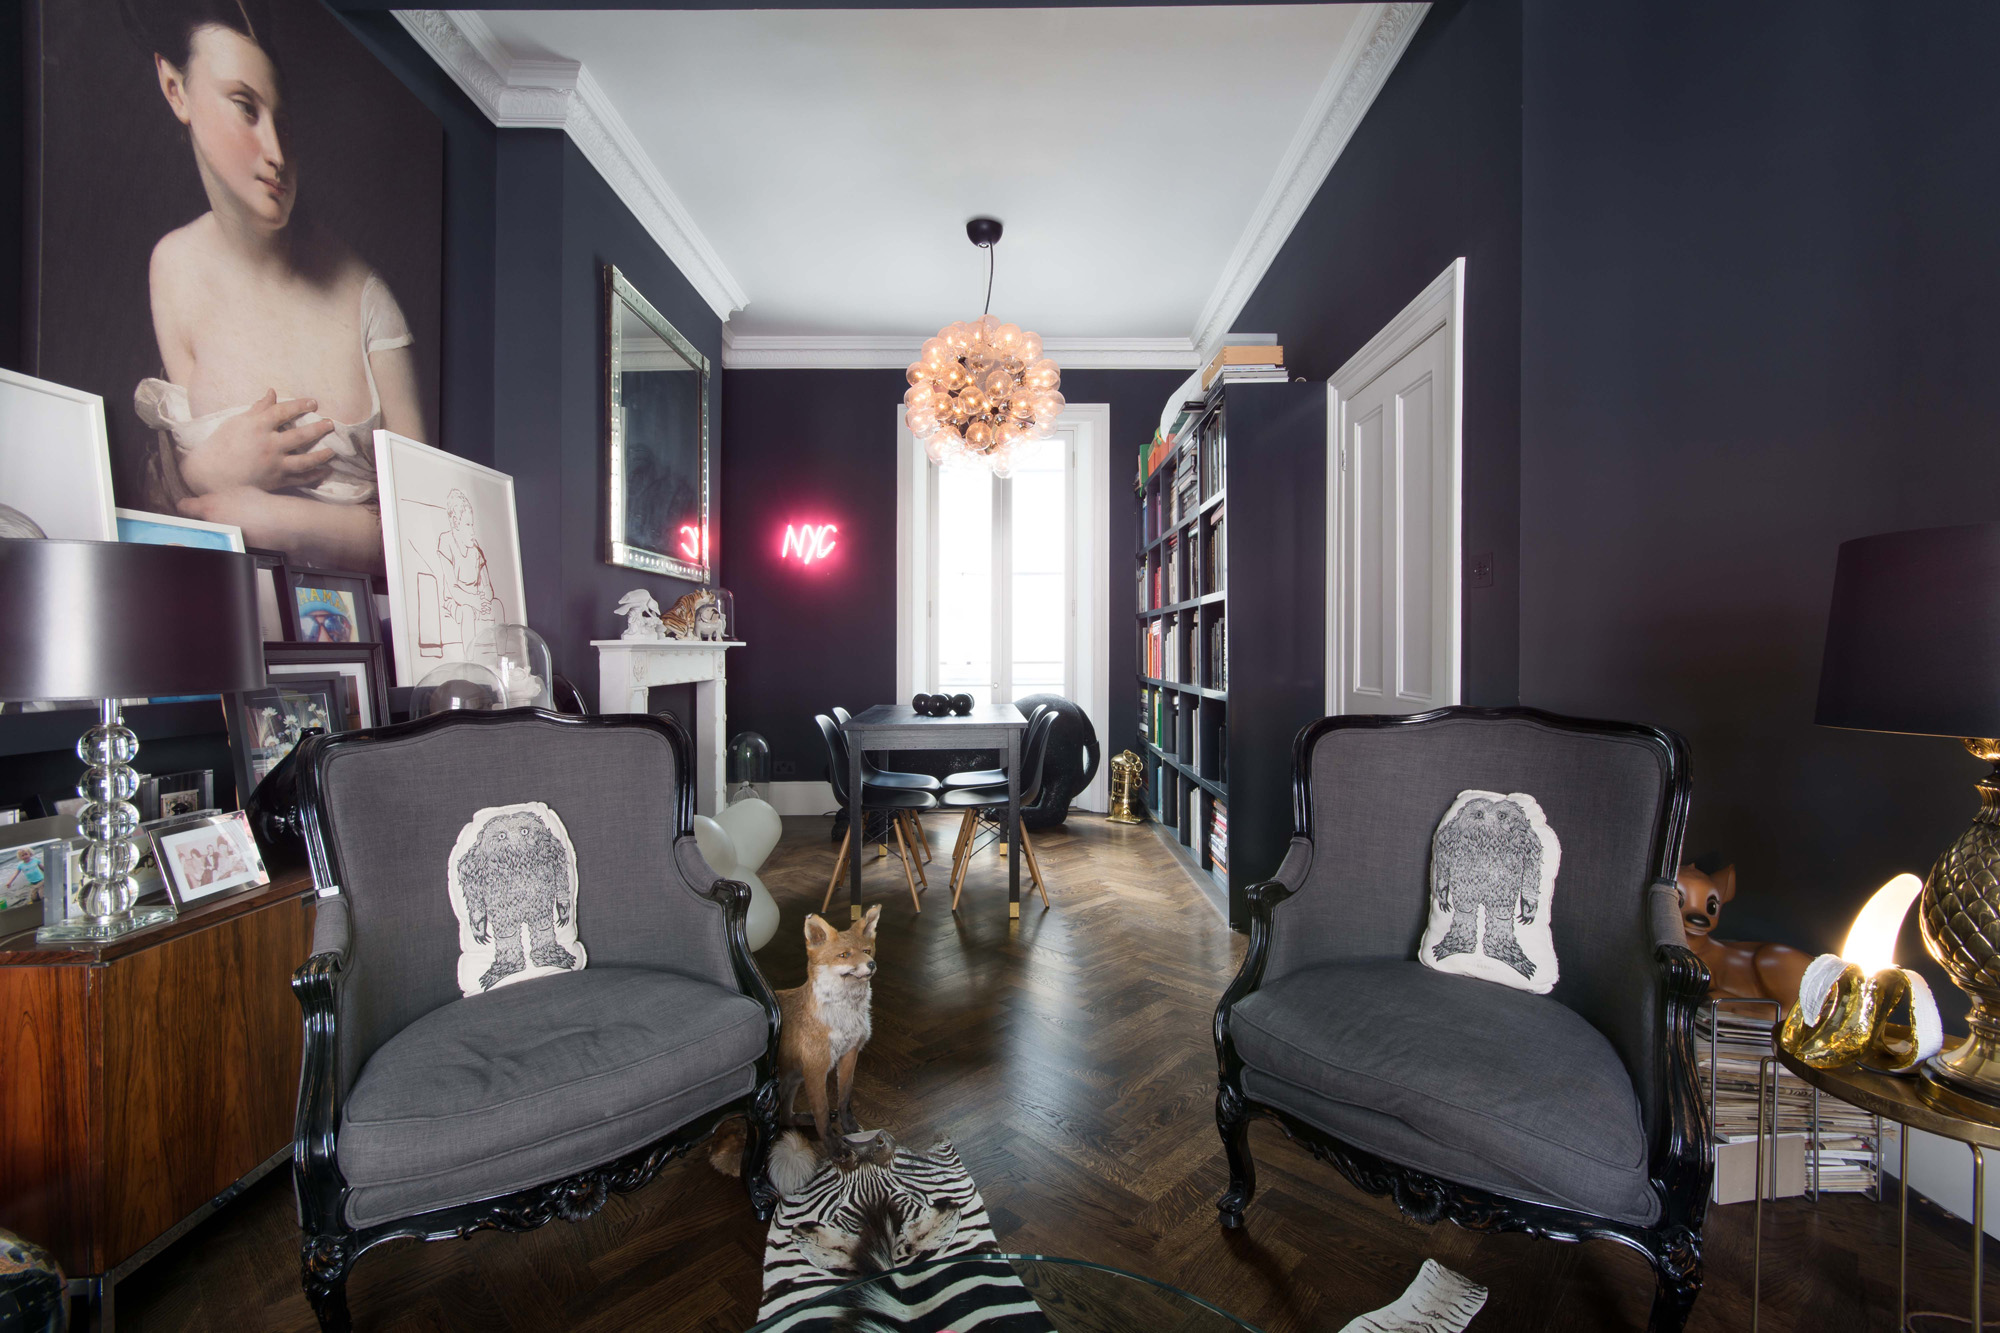 For Rent: Portland Road Notting Hill W11 monochrome interior design in reception room